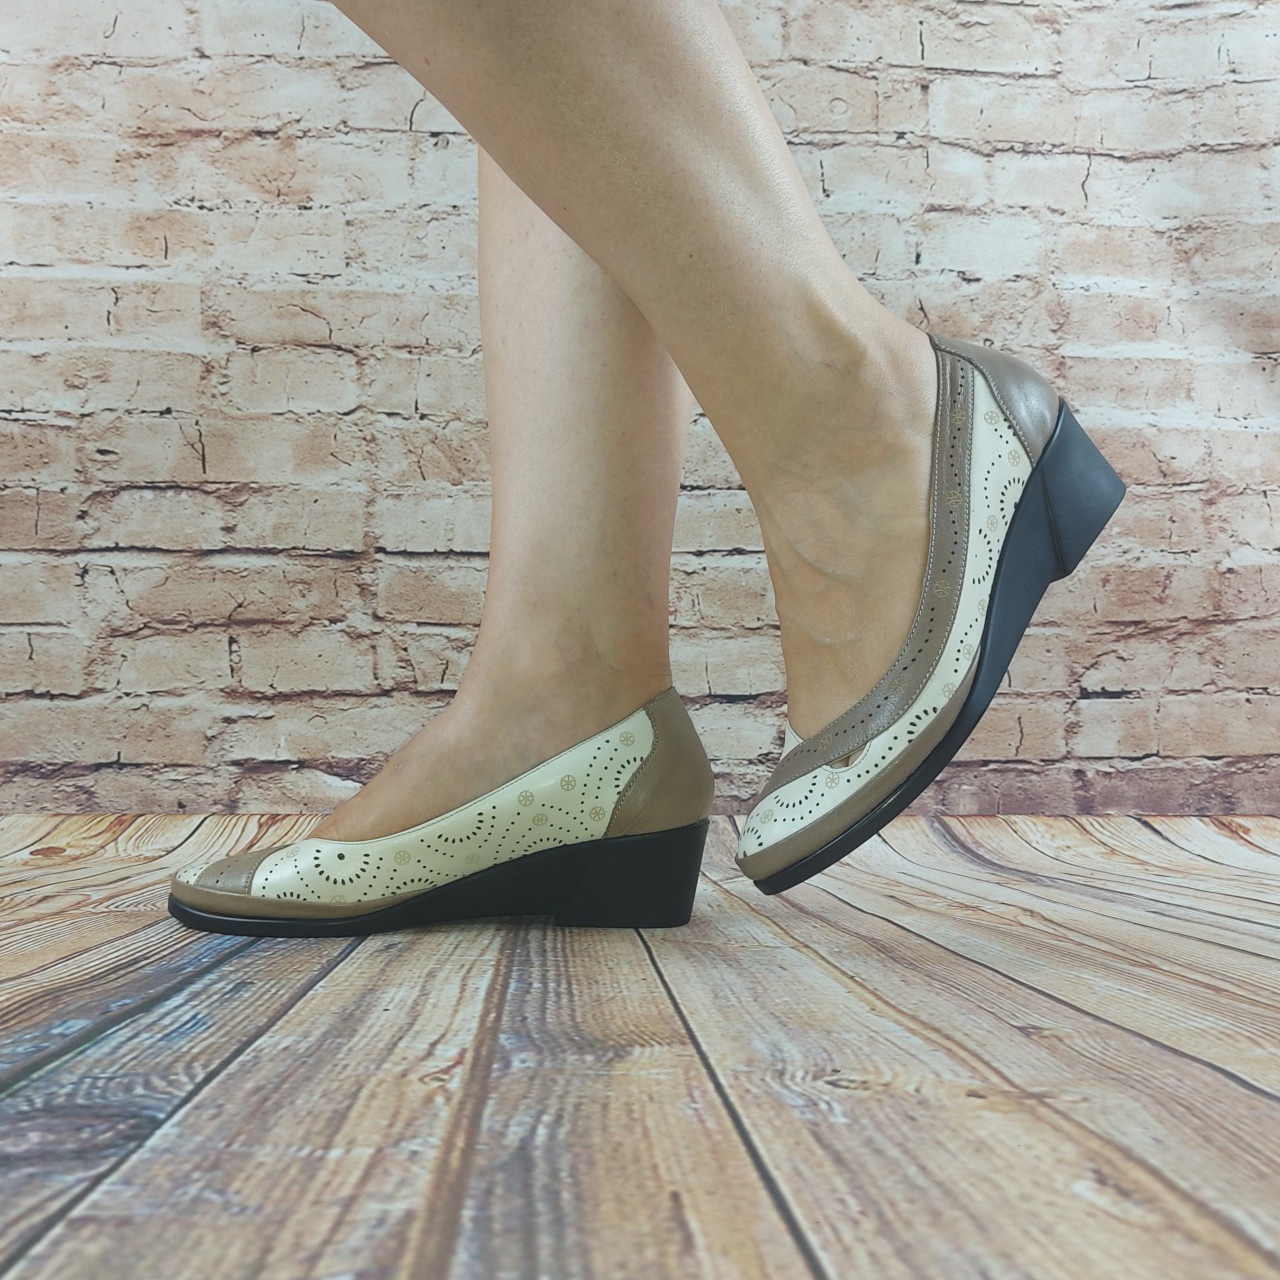 Туфли женские Marani Magli 762-16-78 бело-коричневые кожа танкетка размеры 36,37 